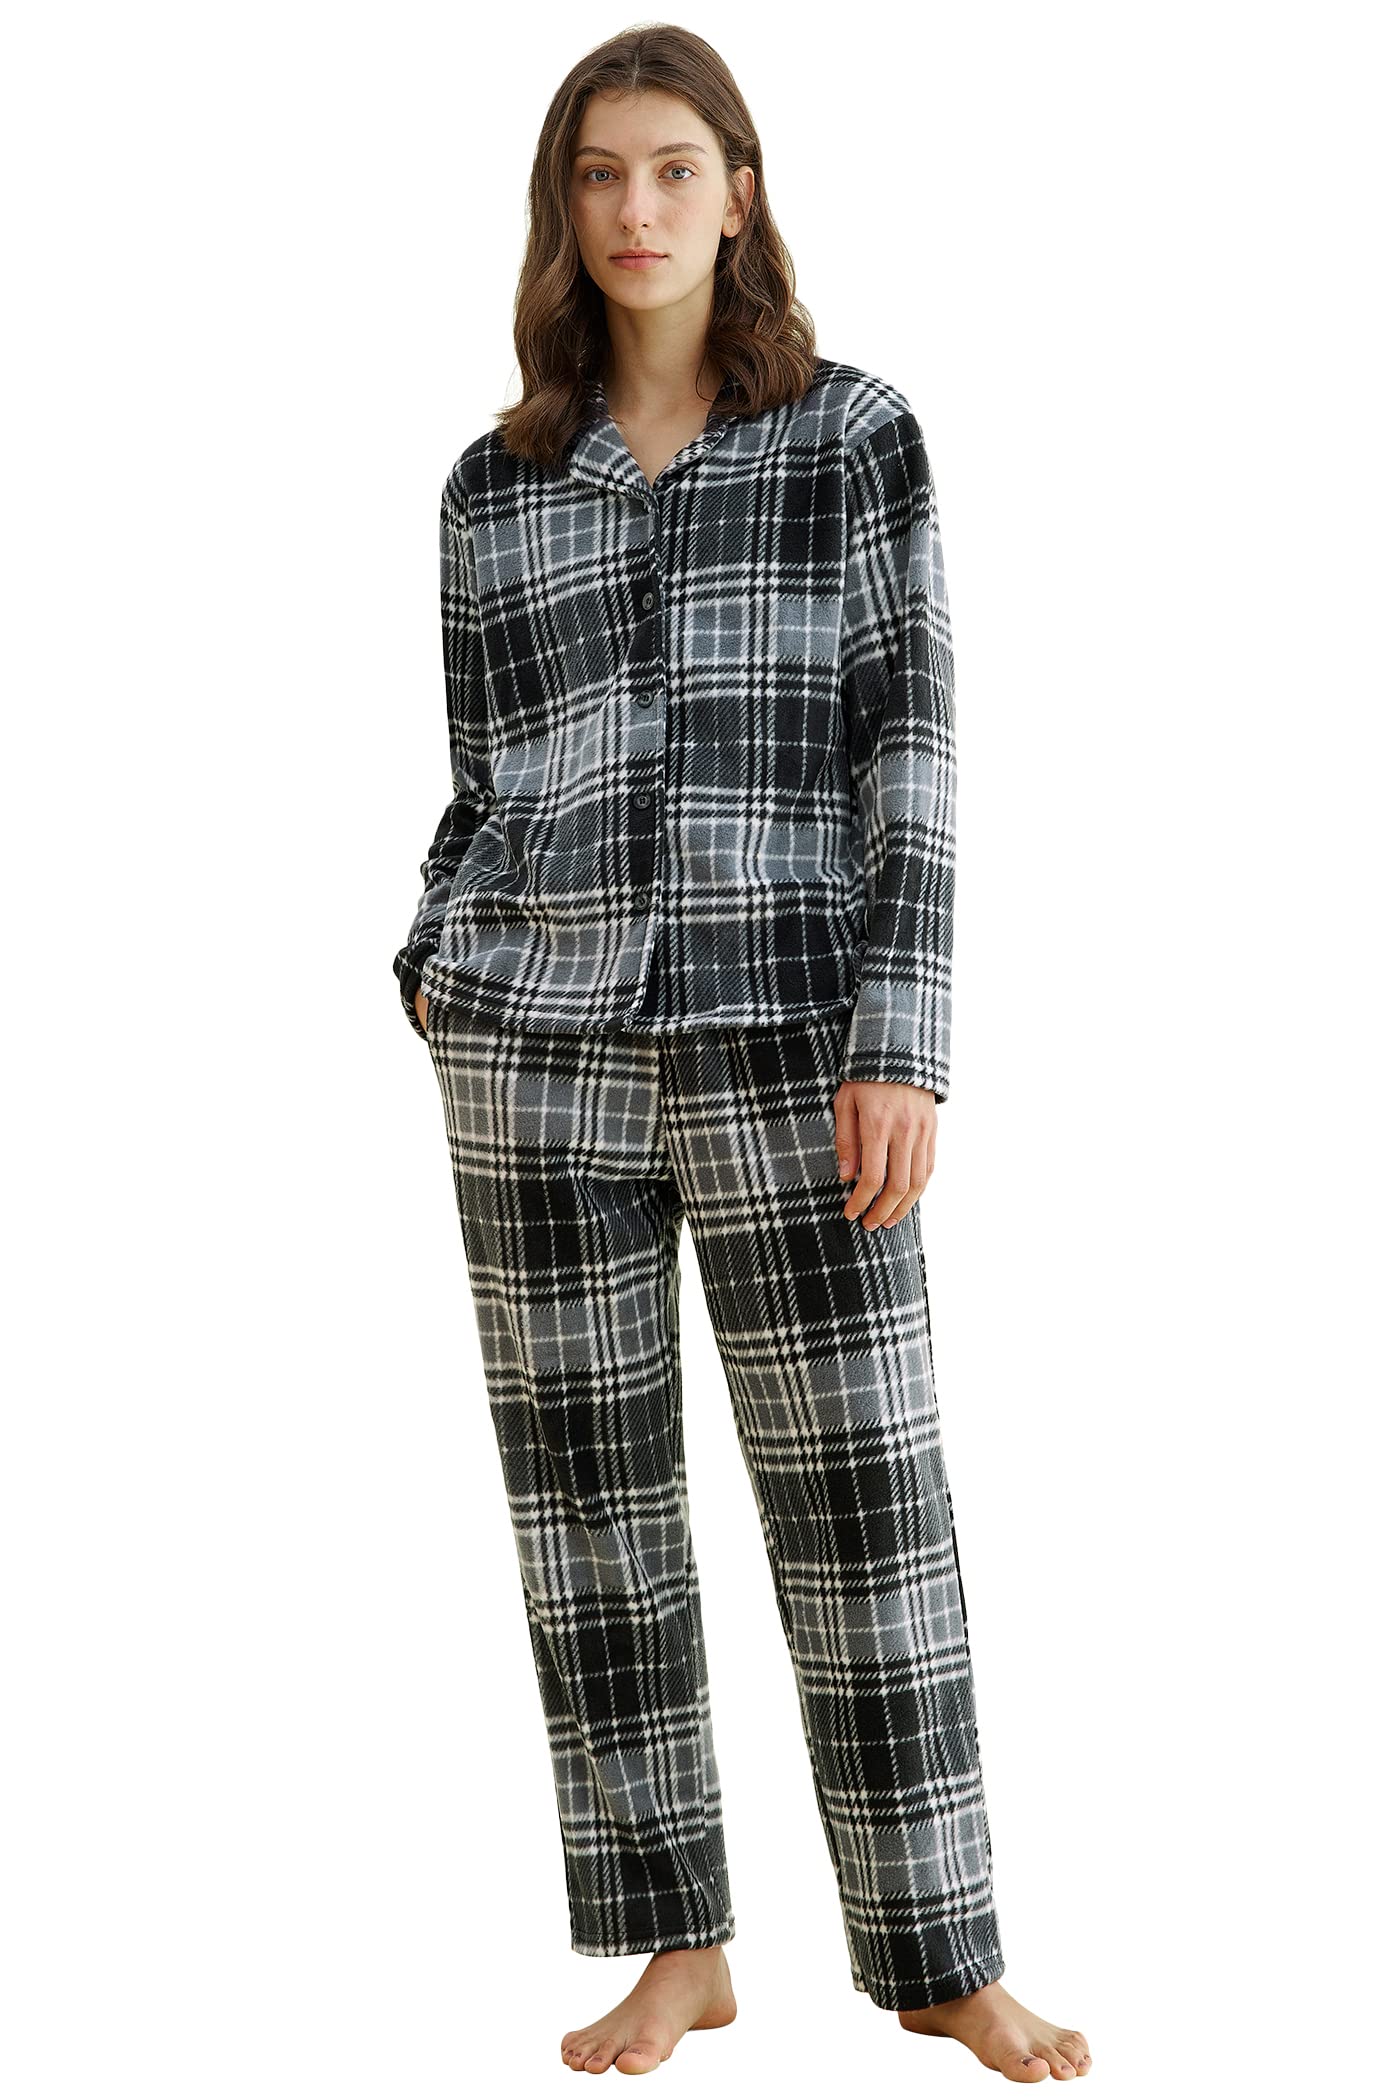 Women's Black & White Plaid Flannel Pajama Sets